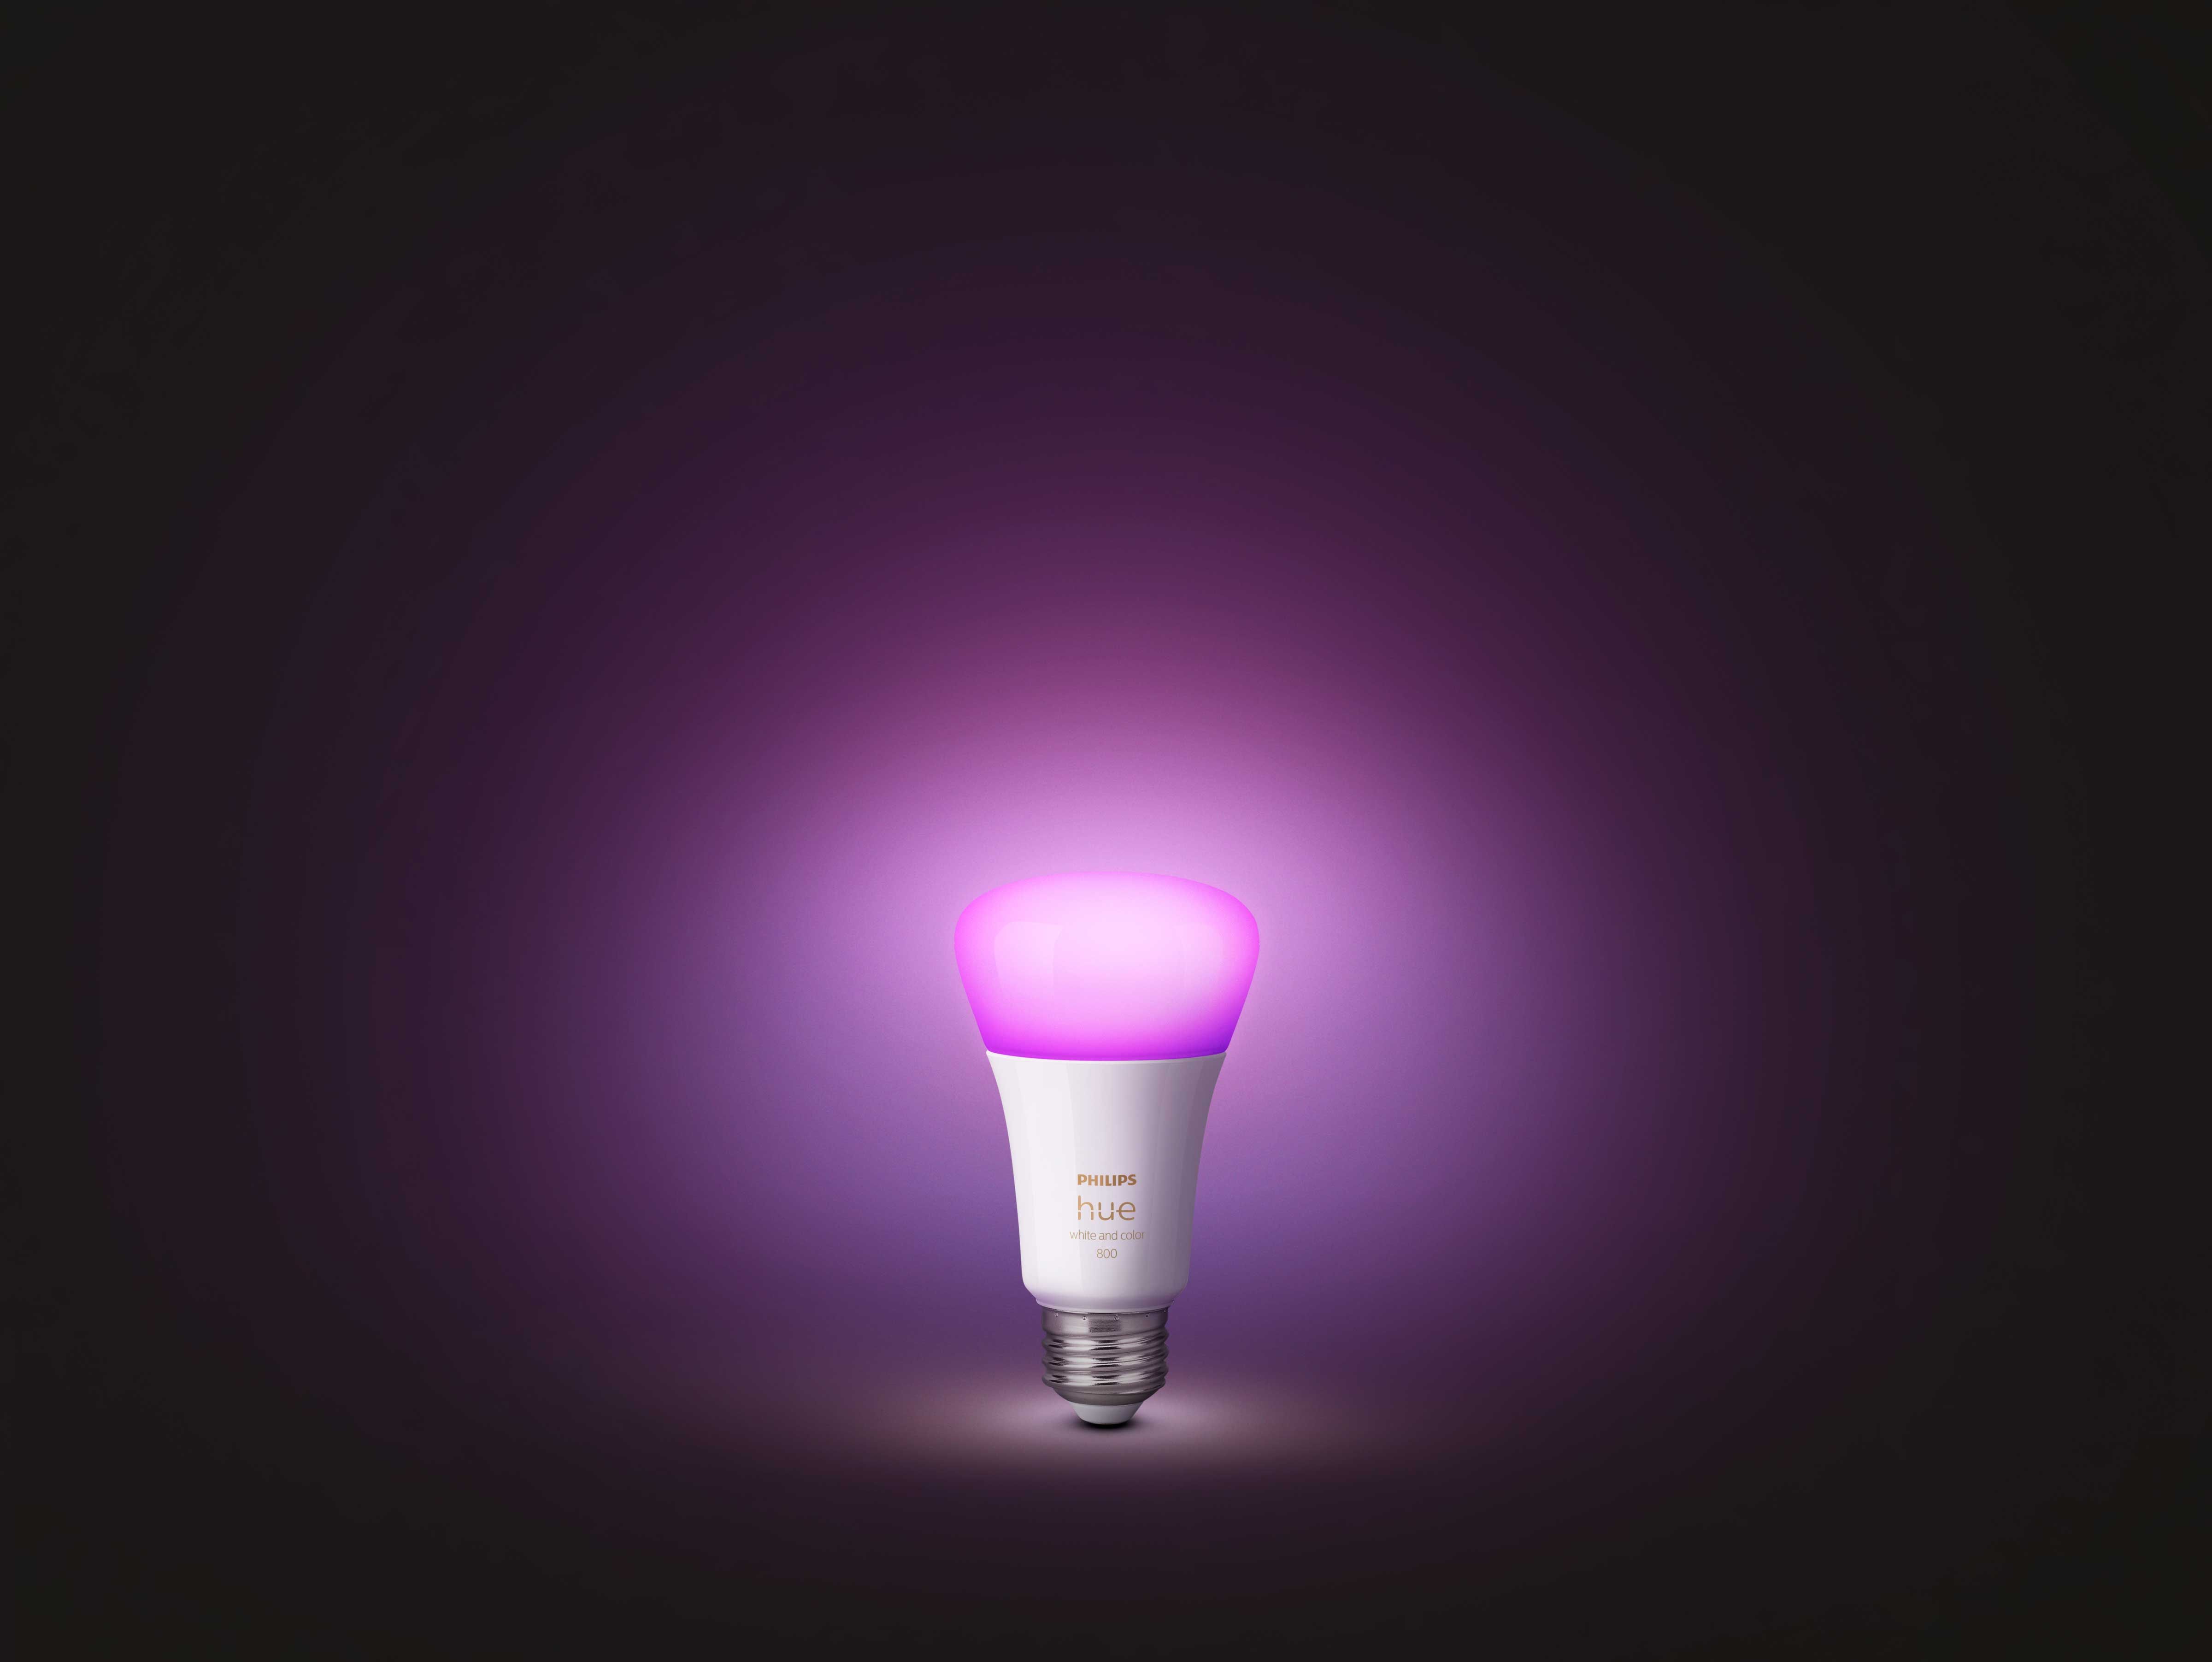 Bourgondië Commotie Dicht Philips Hue Smart Bulb | Best Smart Lights 2021